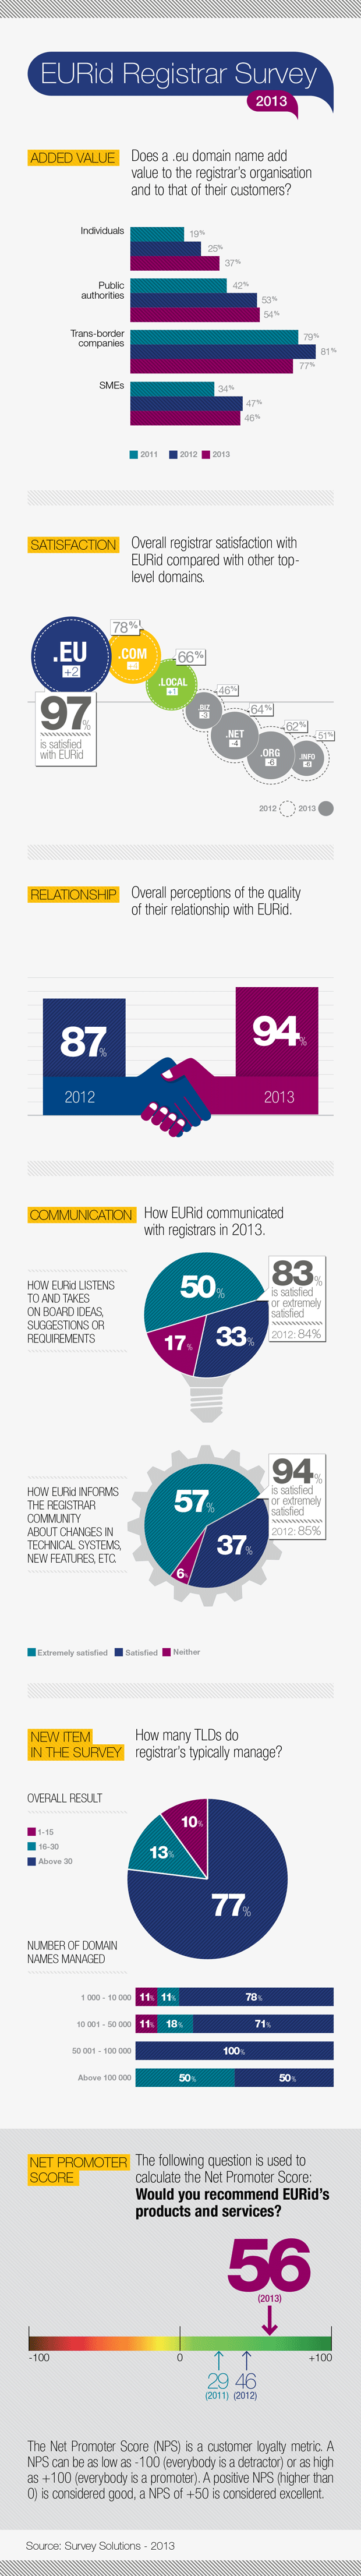 infographic-eu-Satisfaction_survey_2013